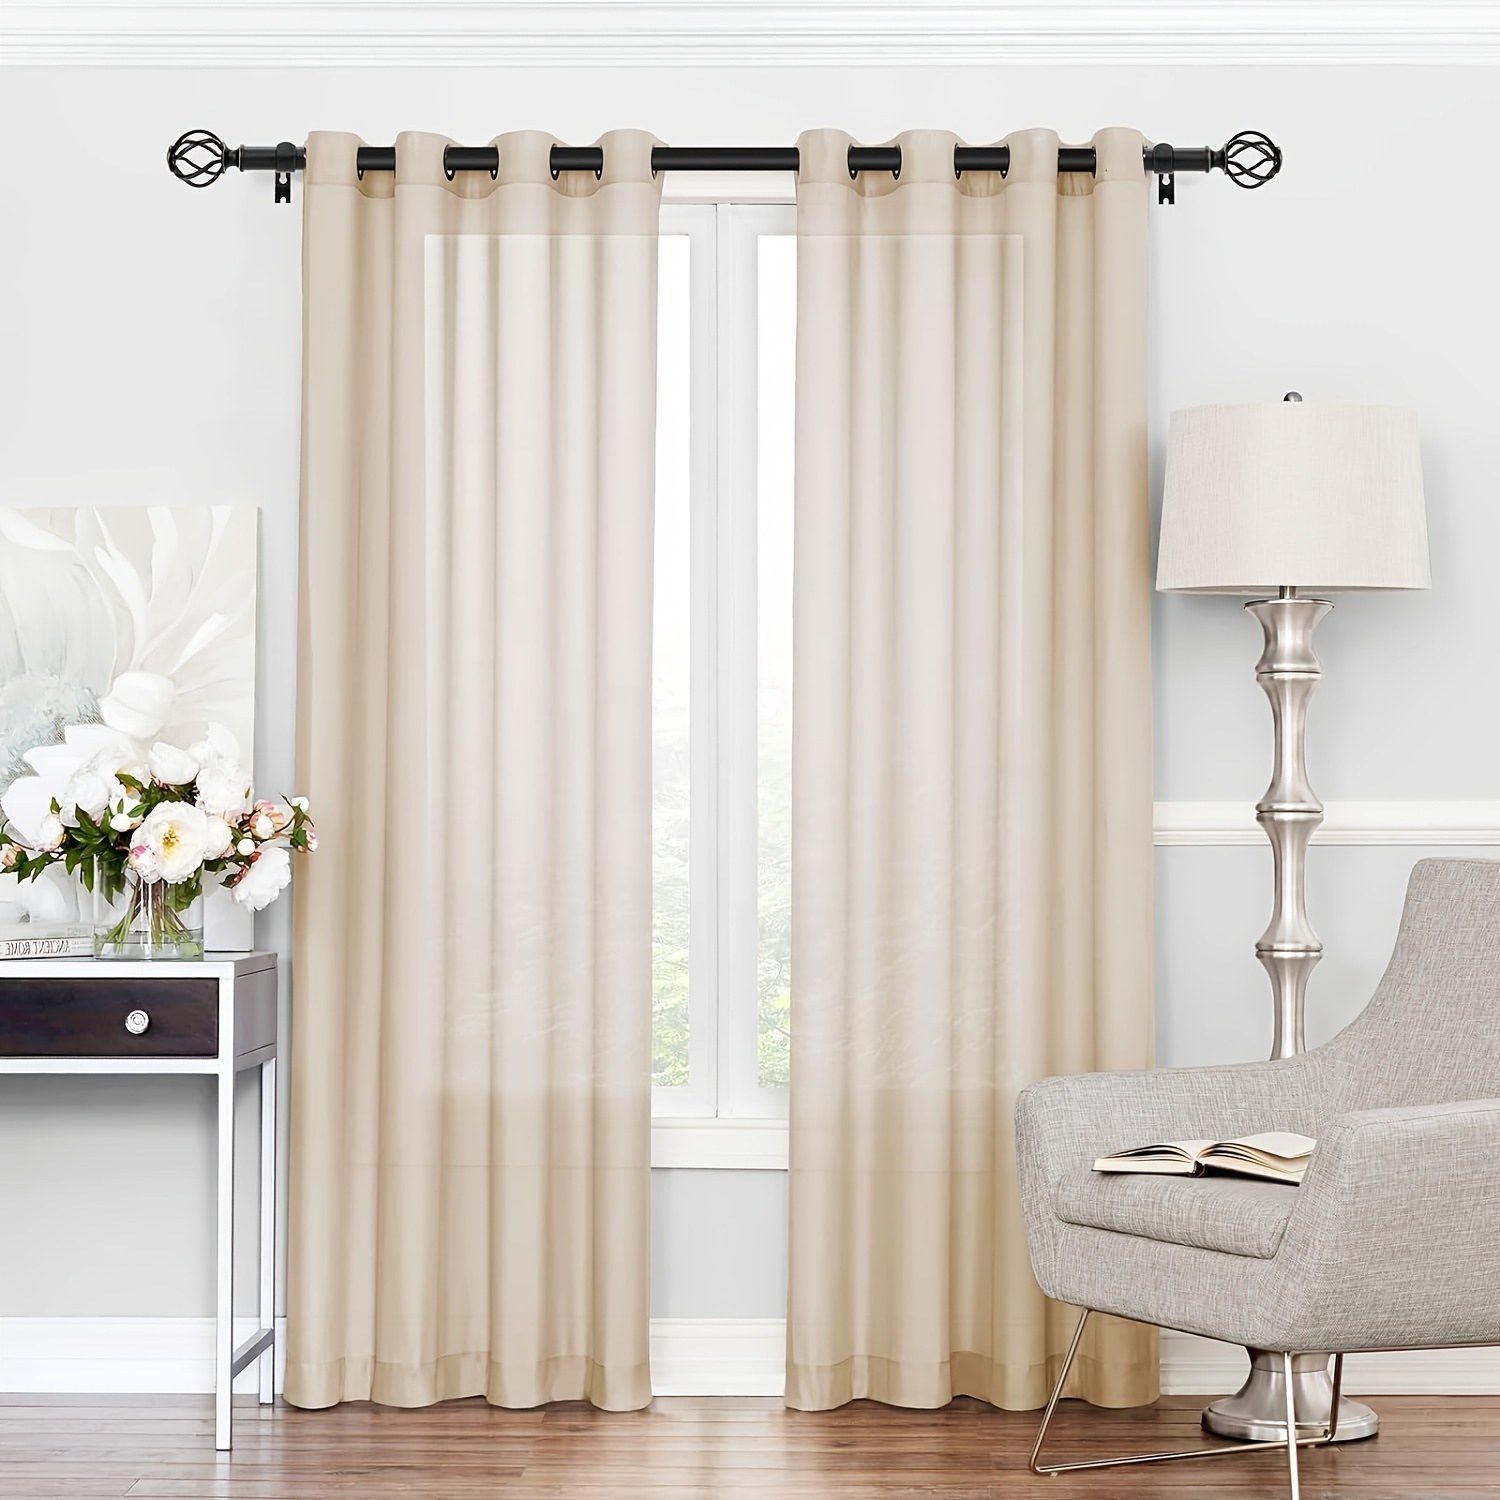 Paquete de 2 barras de cortina doradas para ventana de 28-48 pulgadas  (2.3-4 pies), barra de cortina ajustable resistente con remates de tapa,  barra